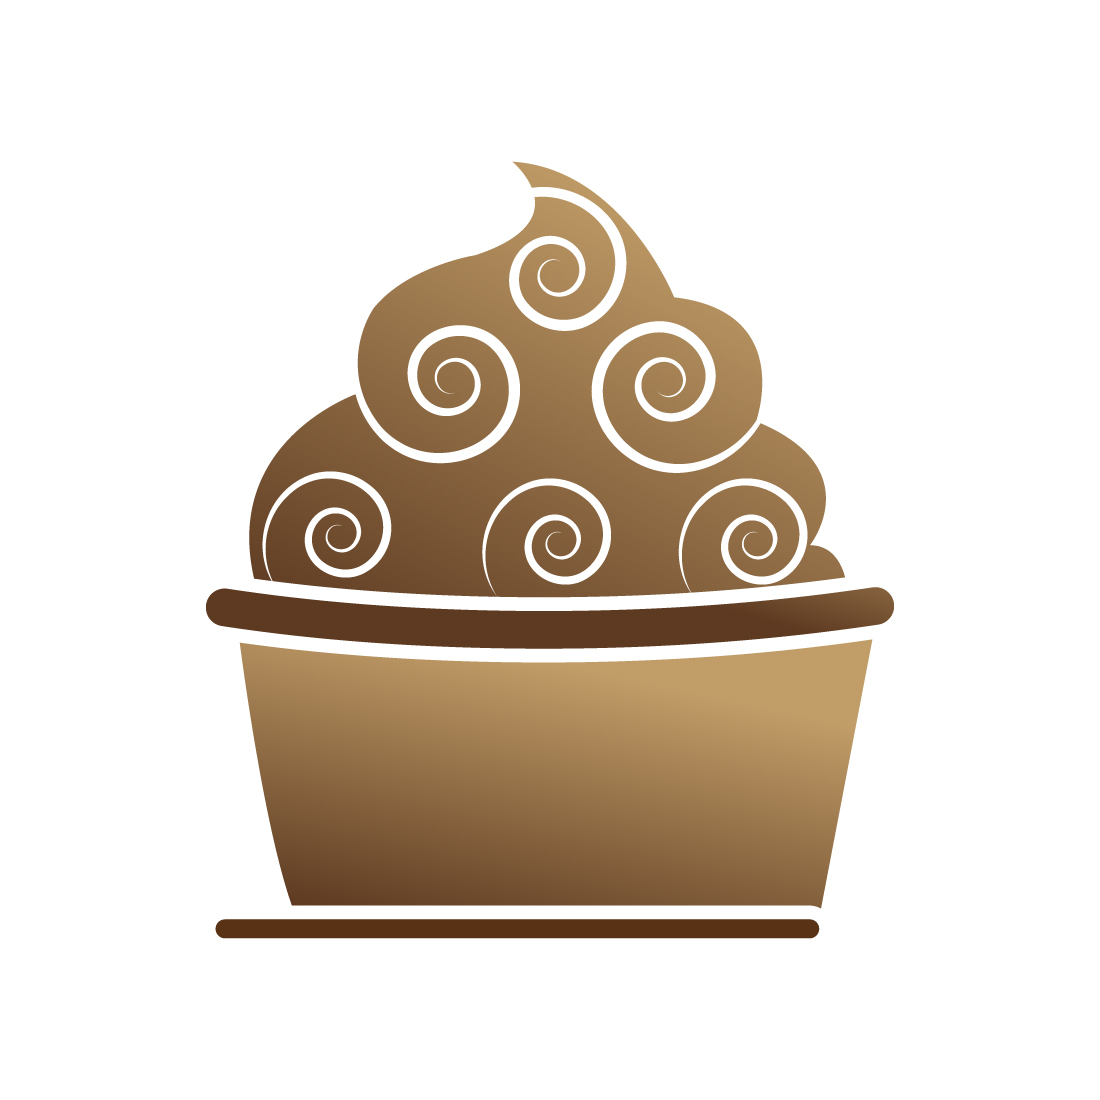 Vanilla ice cream logo design vector images Cack logo best icon design Ice cream logo template royalty preview image.